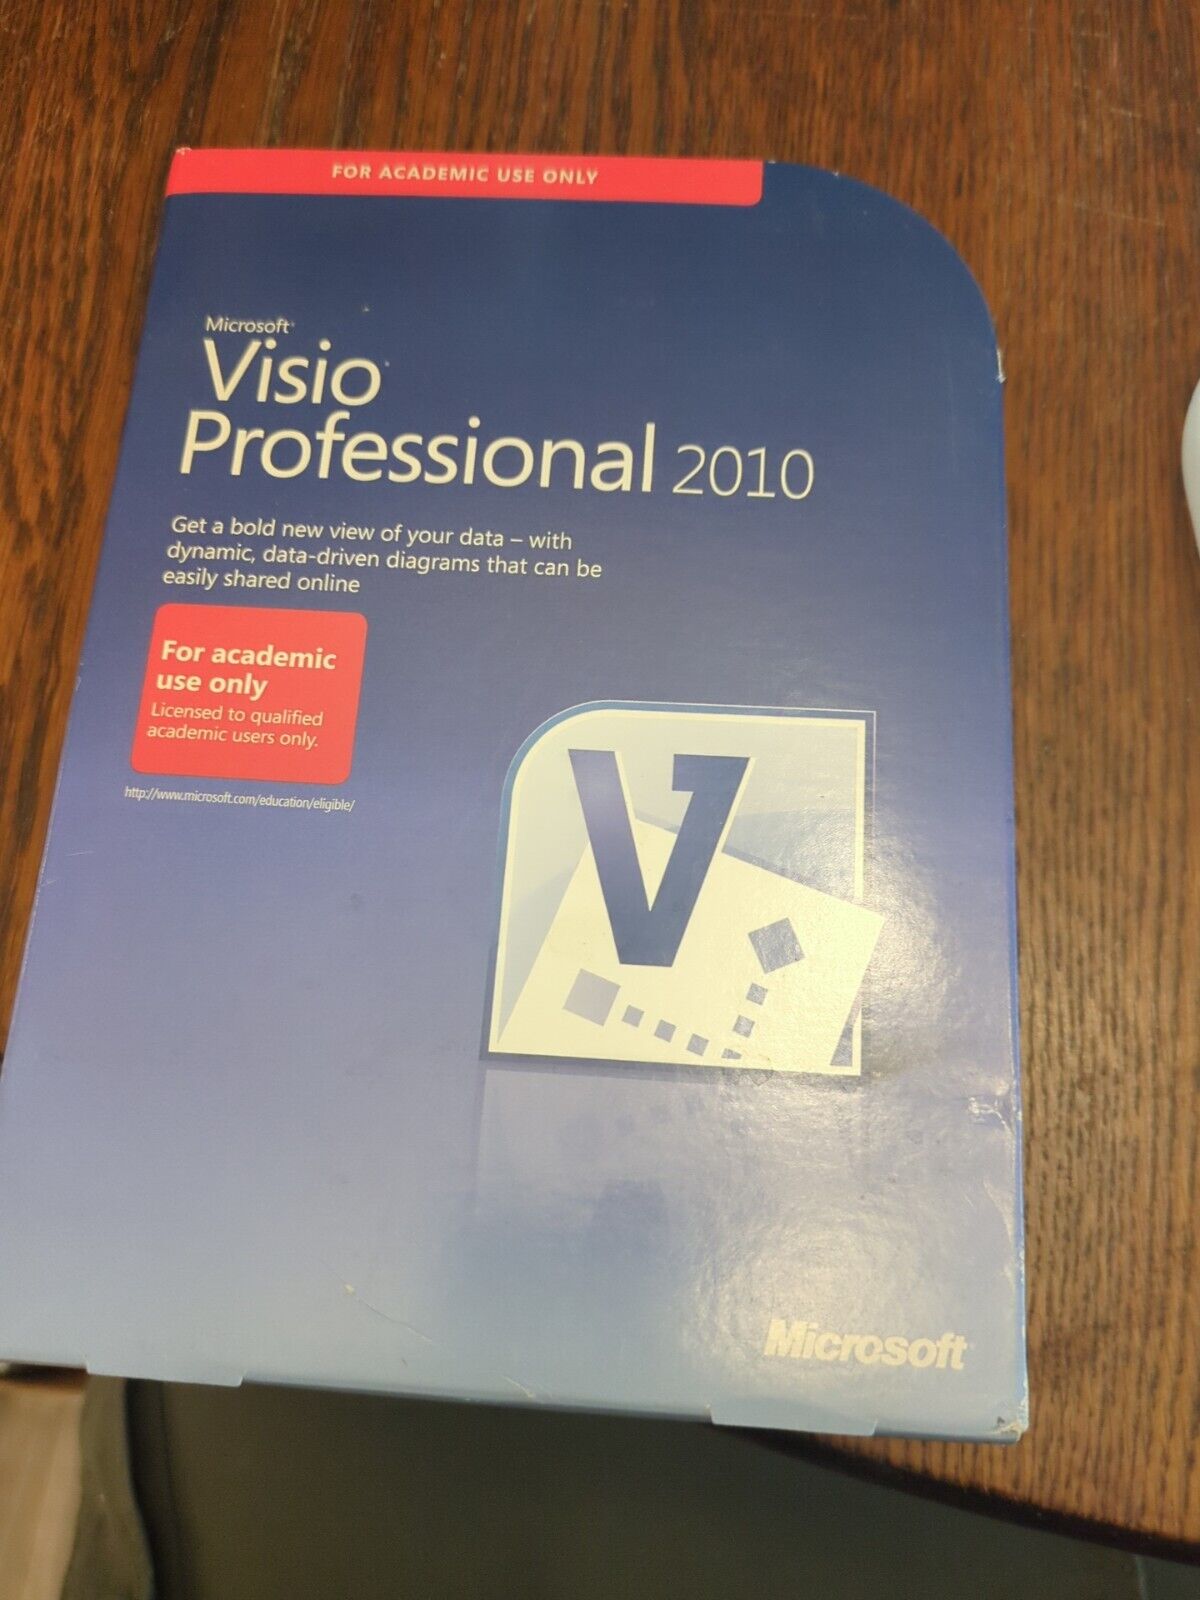 Microsoft Visio Professional 2010 -academic Use- For Windows 